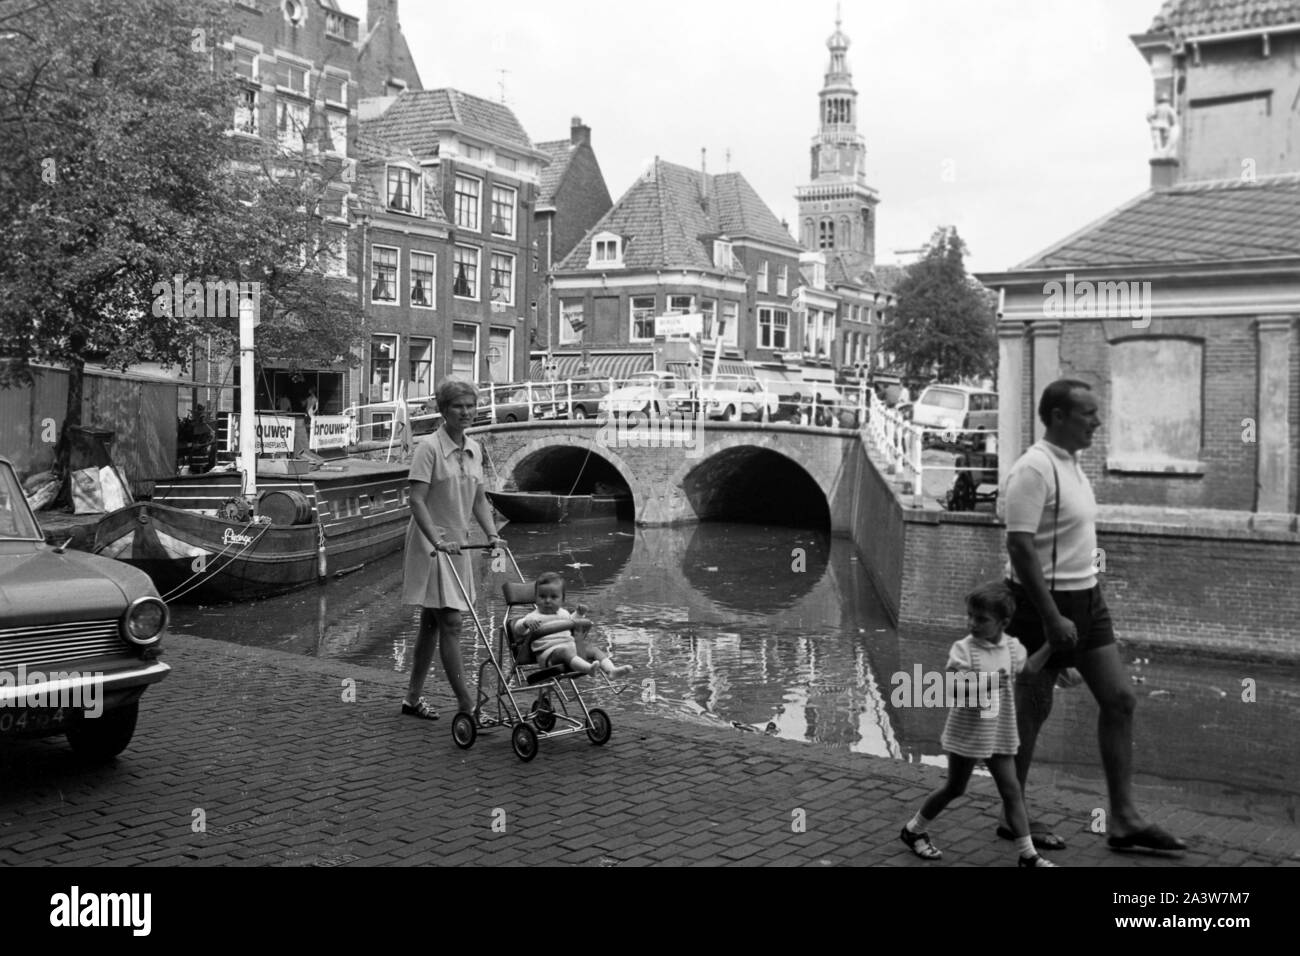 An der Gewelfde Steenenbrug Brücke über einer Gracht in Alkmaar, Niederlande 1971. Vaulted Stone Bridge over a town canal at Alkmaar, The Netherlands 1971. Stock Photo